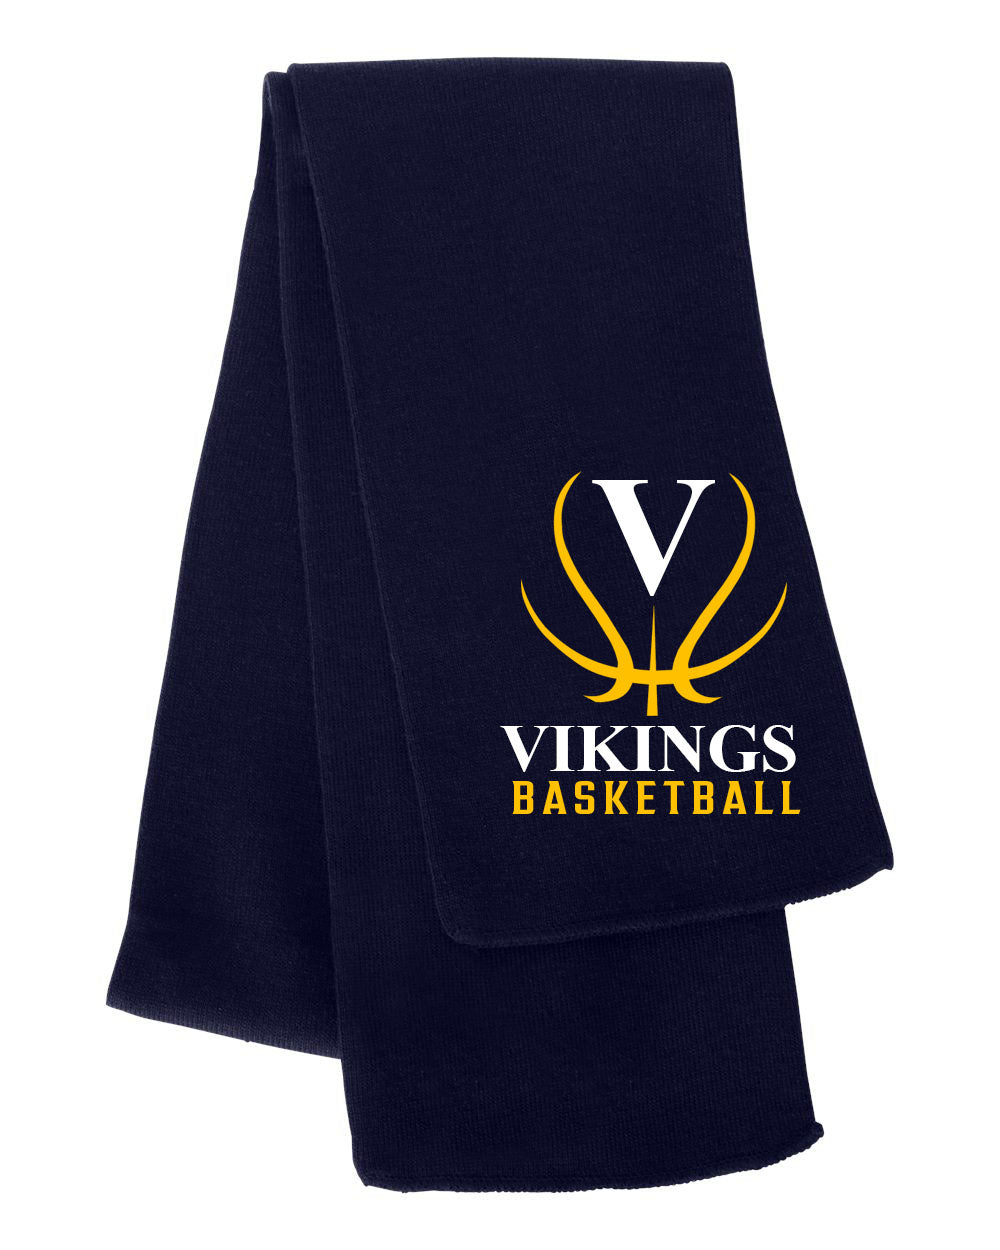 Vikings Basketball design 3 Scarf